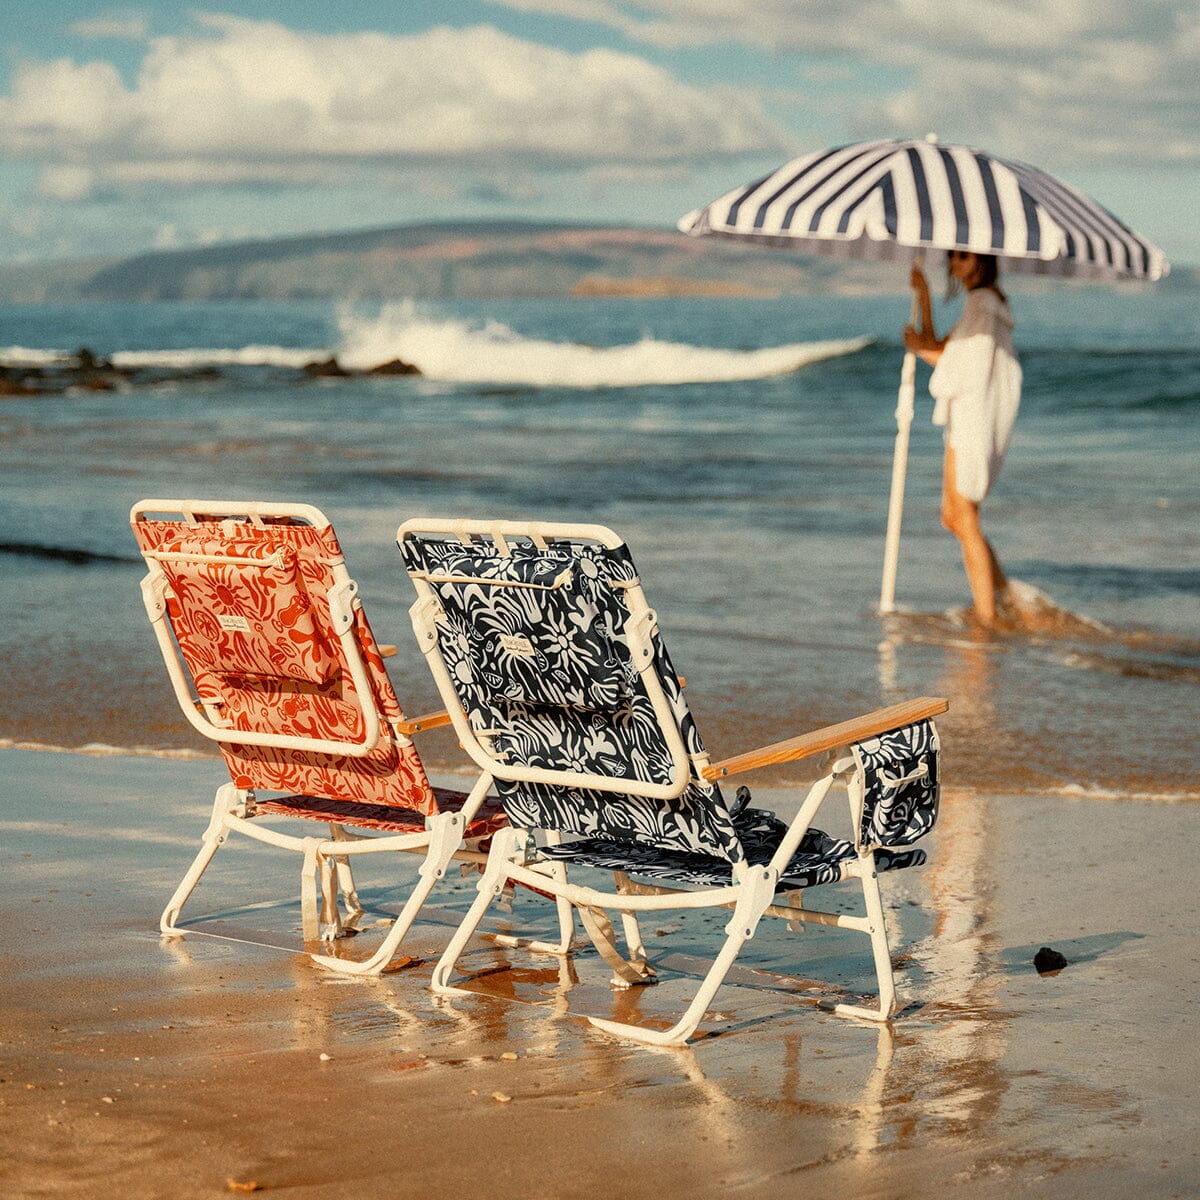 The Mañana Chair - Continental Drifter Tiki Mañana Beach Chair Margaritaville by B&P Co. 